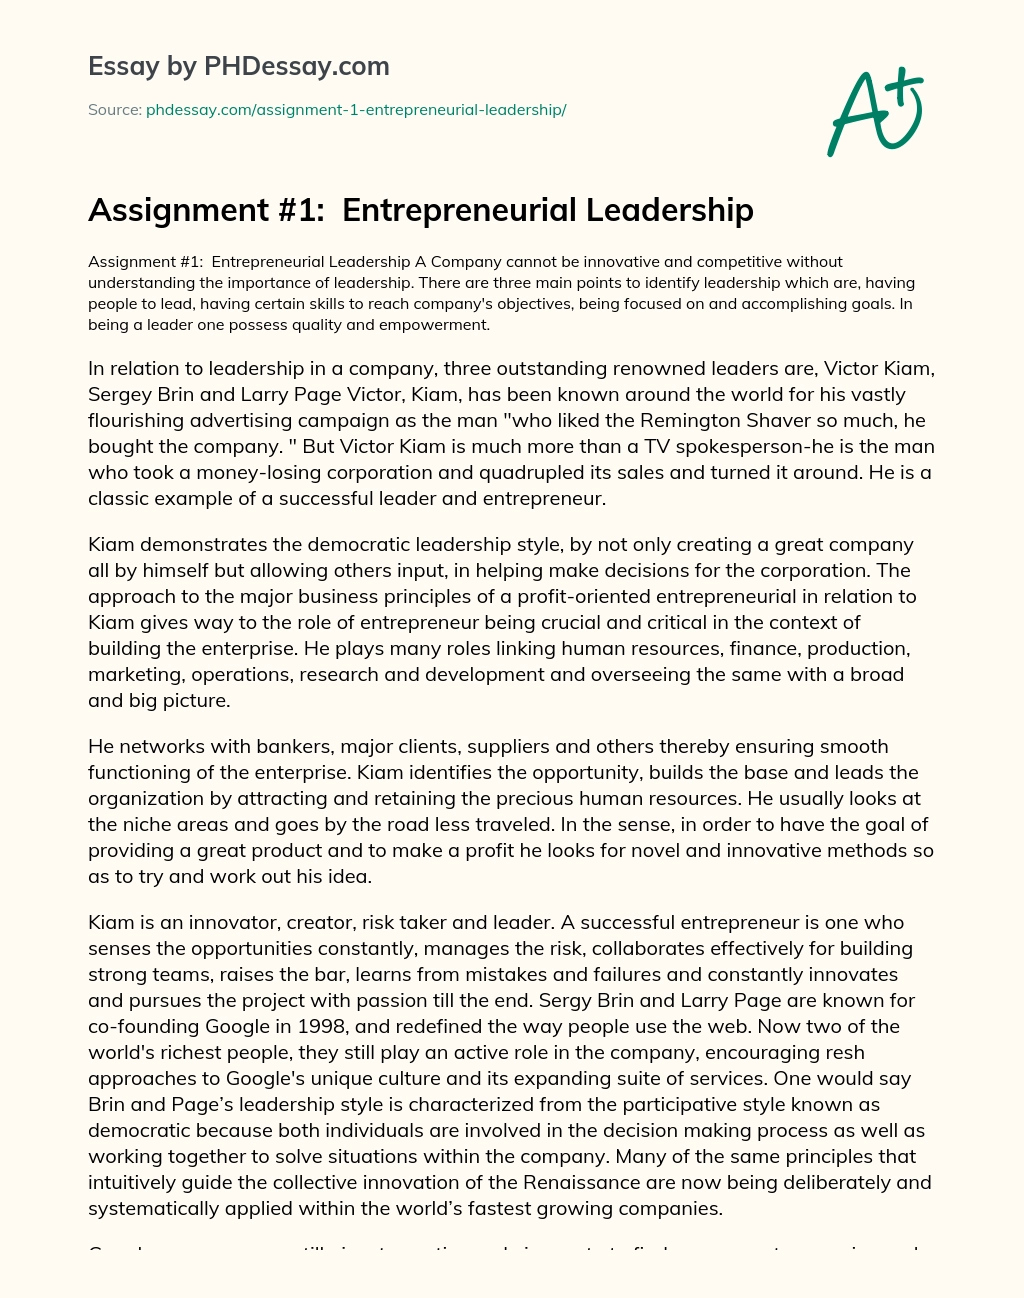 Assignment #1:  Entrepreneurial Leadership essay